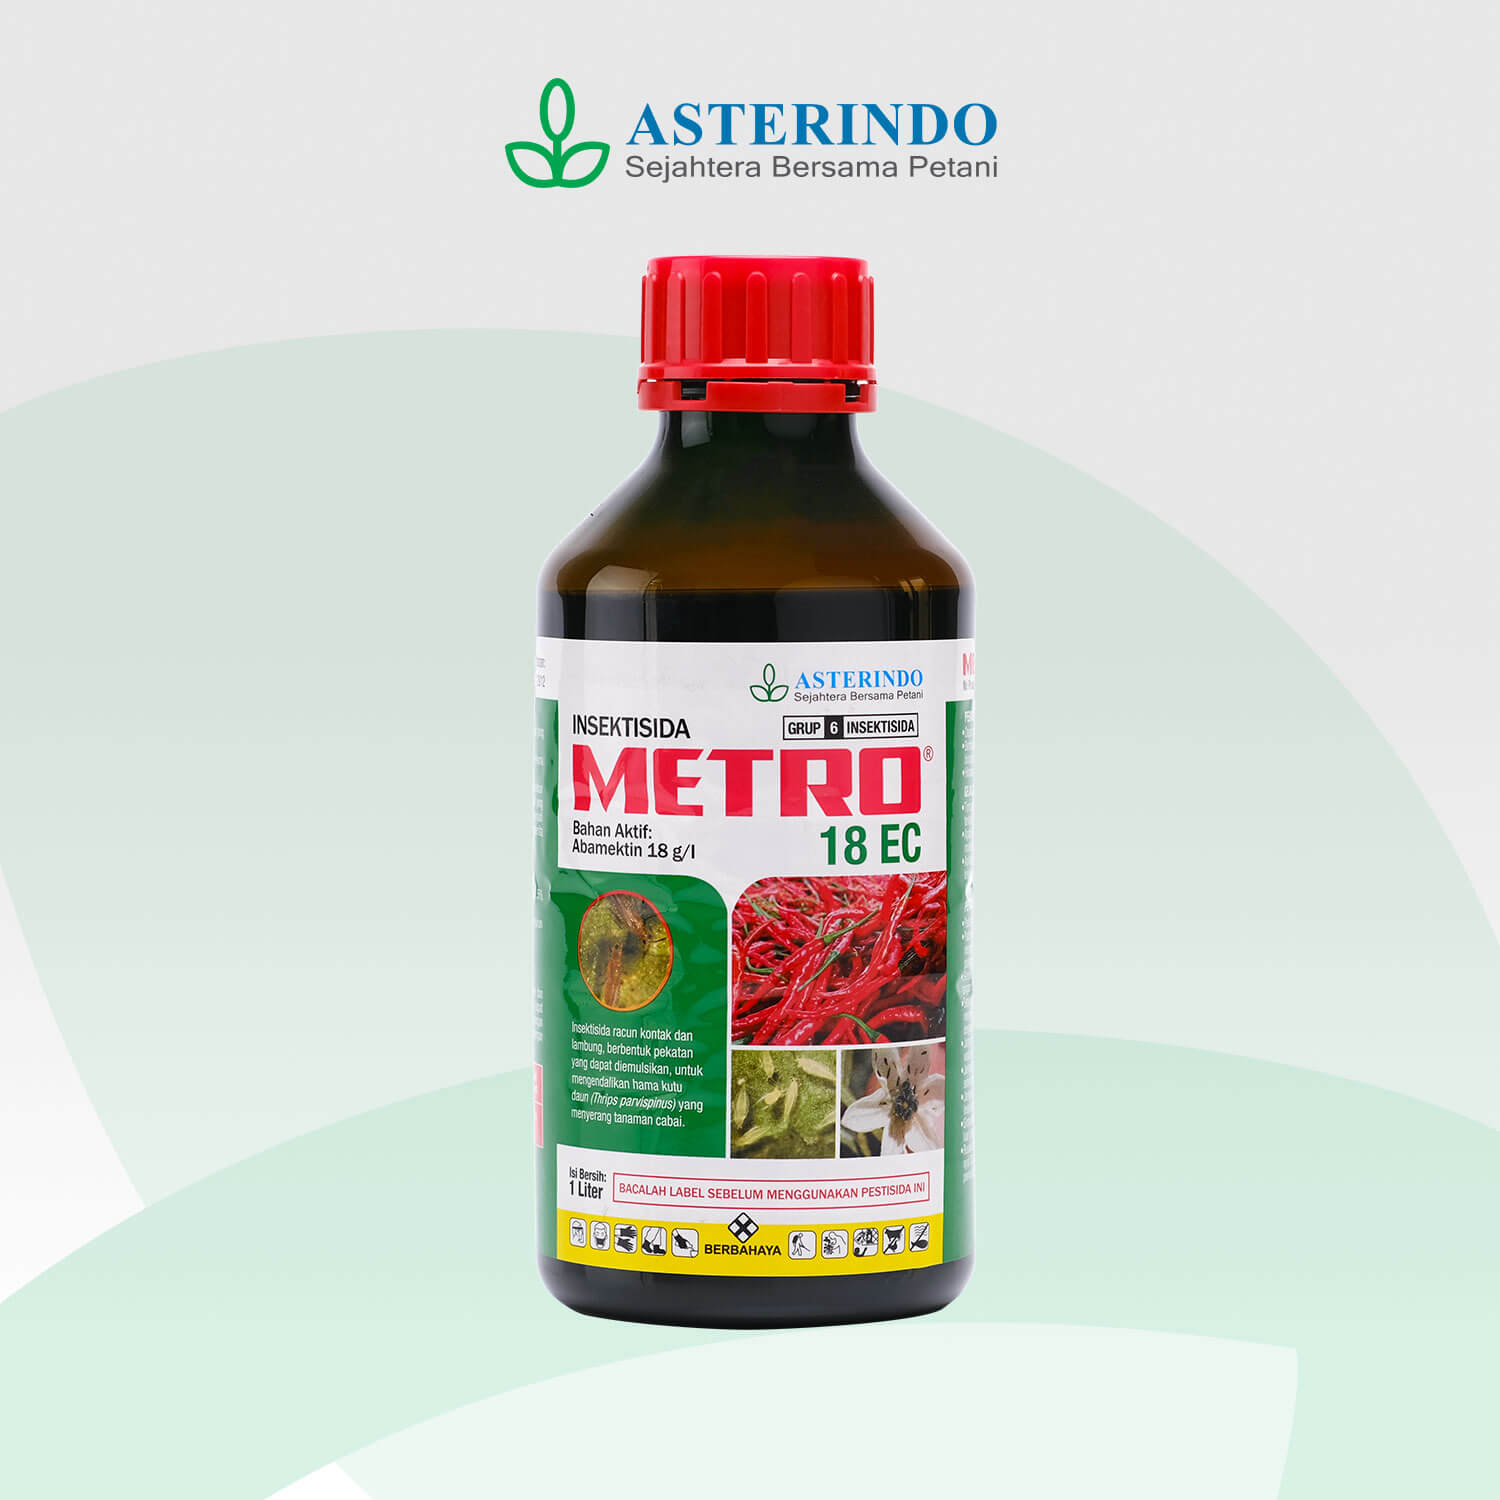 METRO-insektisida-Asterindo